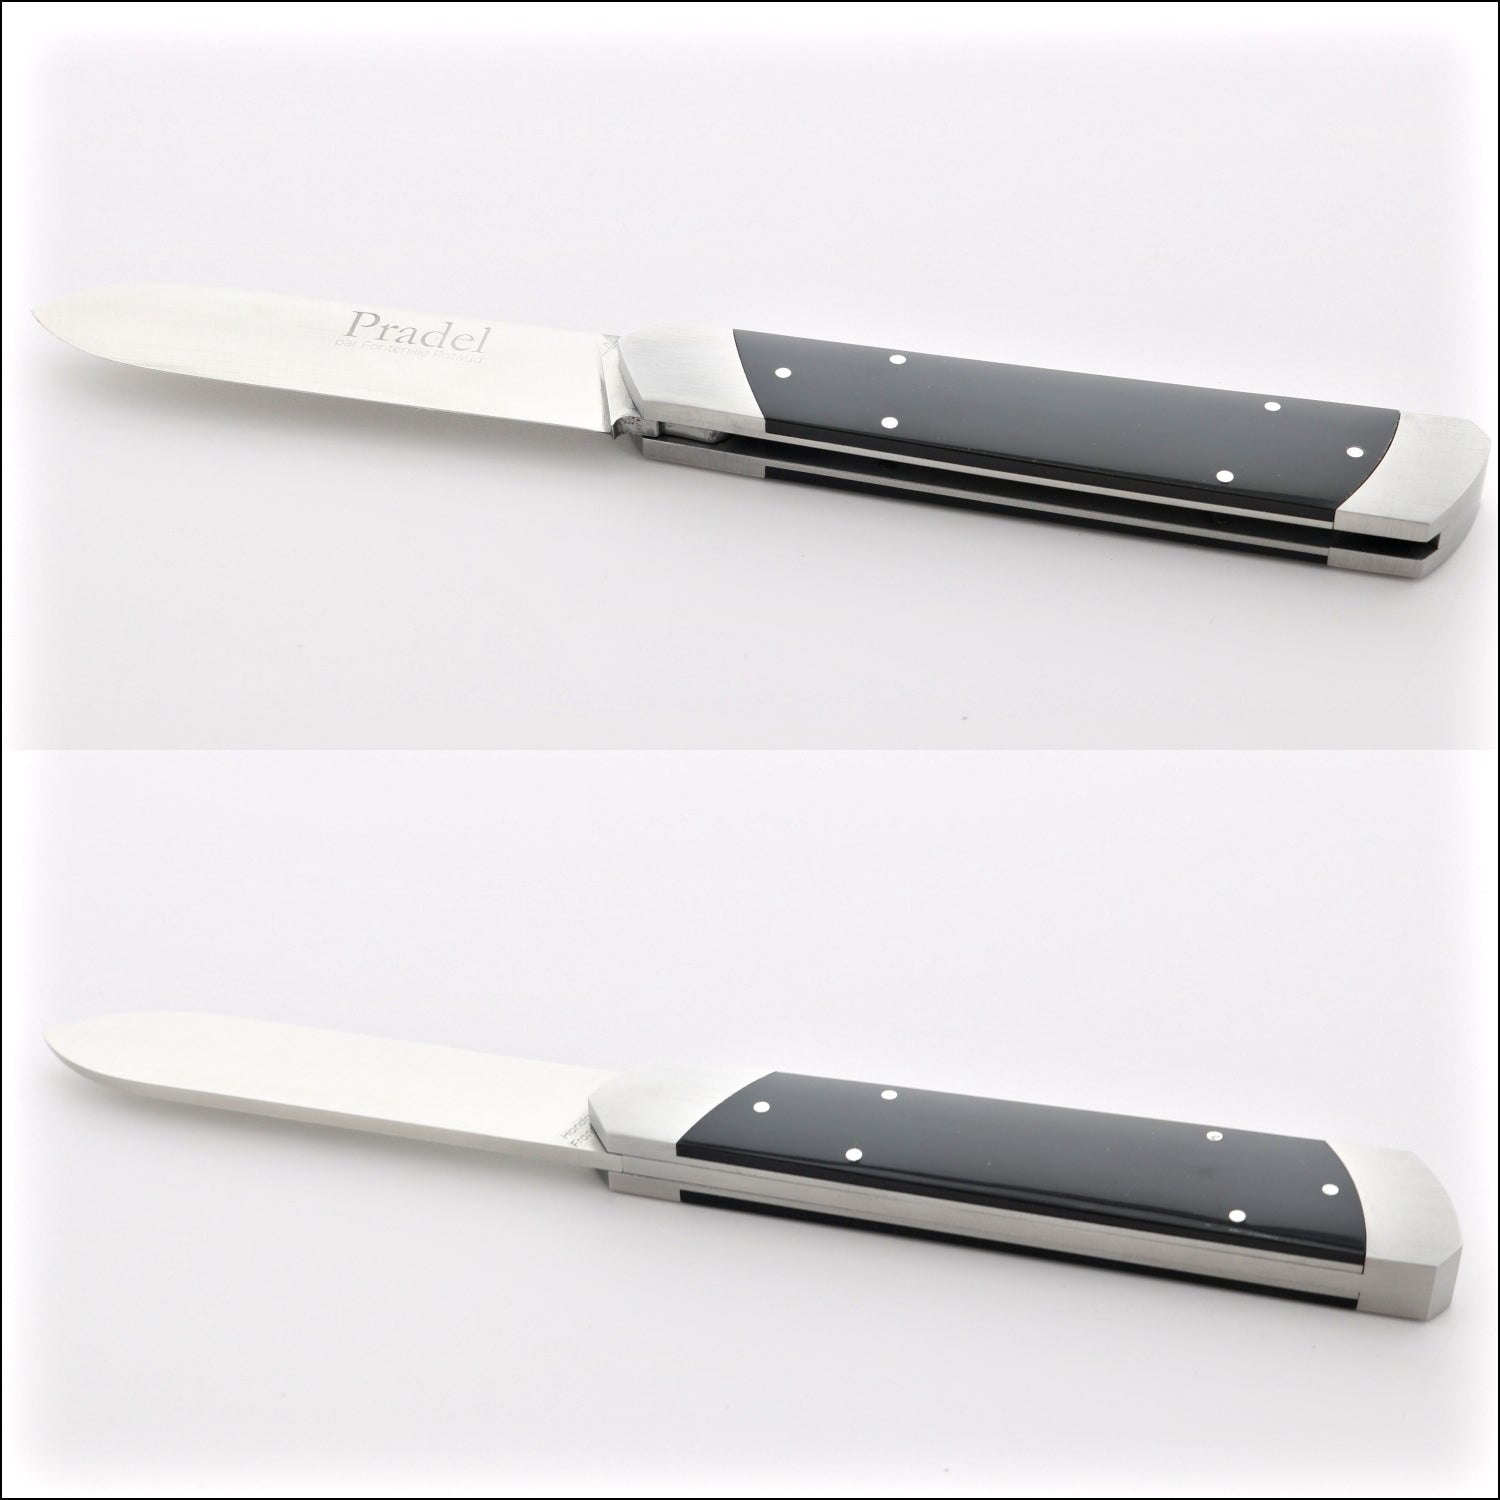 Pradel Folding Knife Black Horn Tip Handle & Lock-Back by Fontenille Pataud